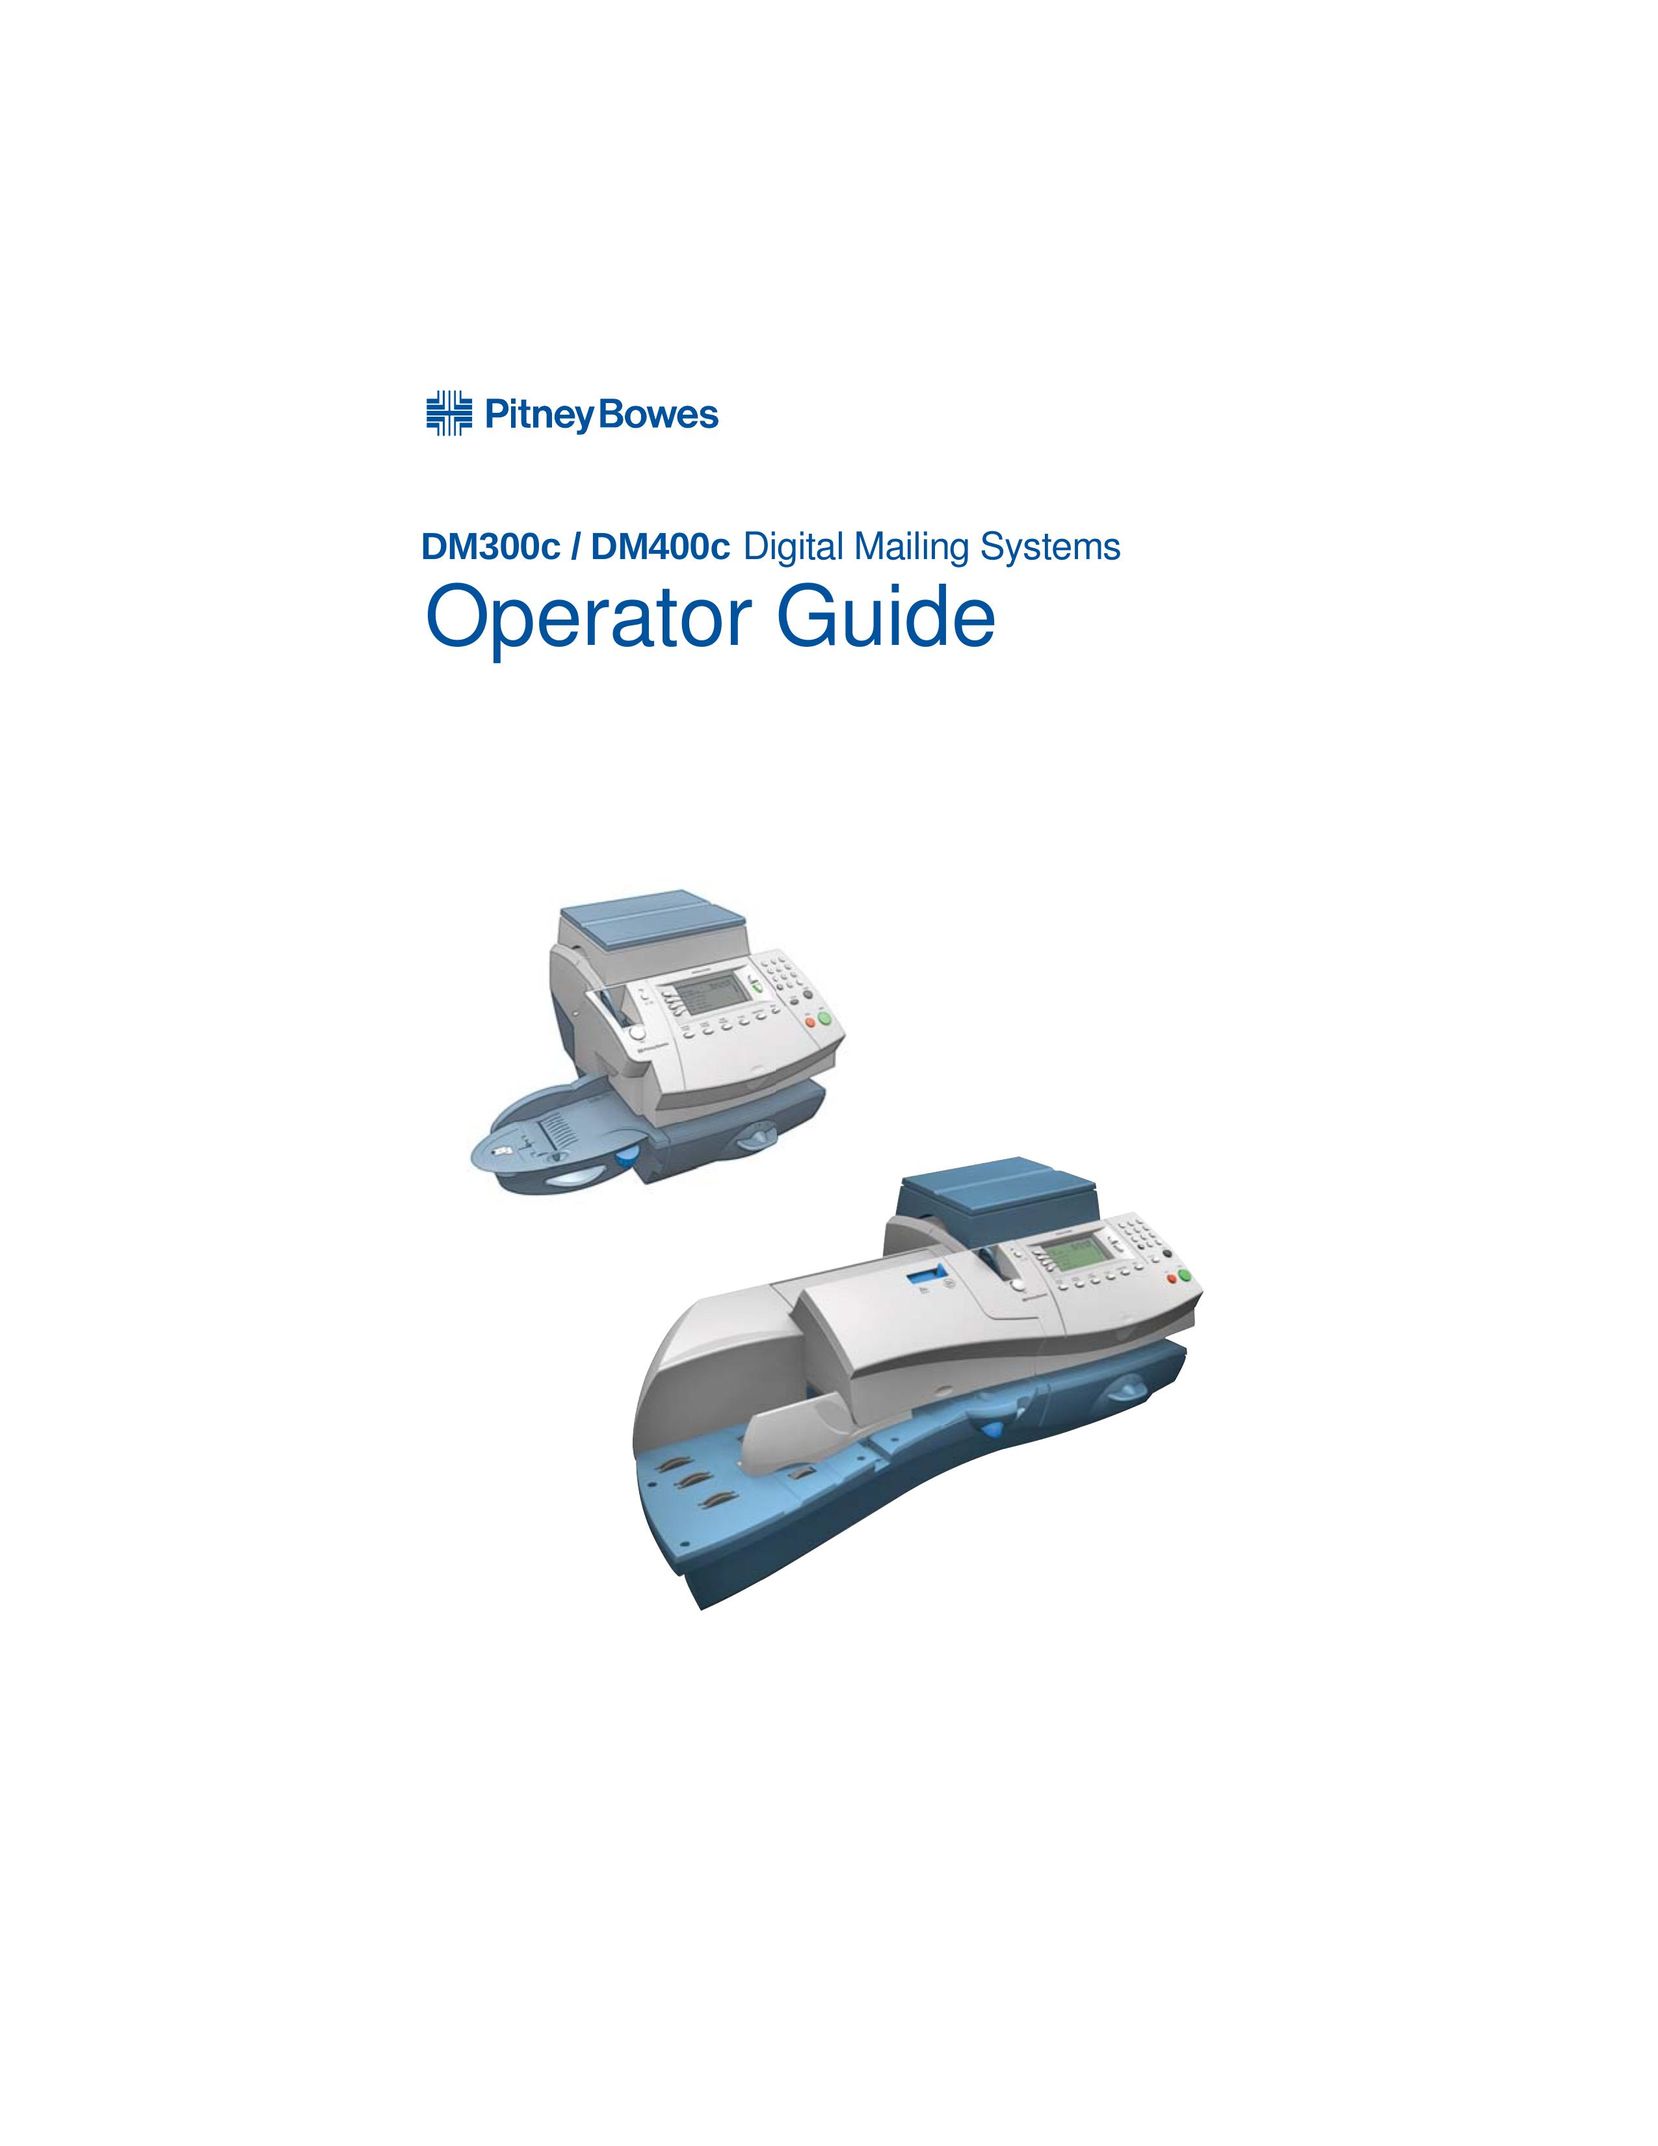 Pitney Bowes DM400C Postal Equipment User Manual